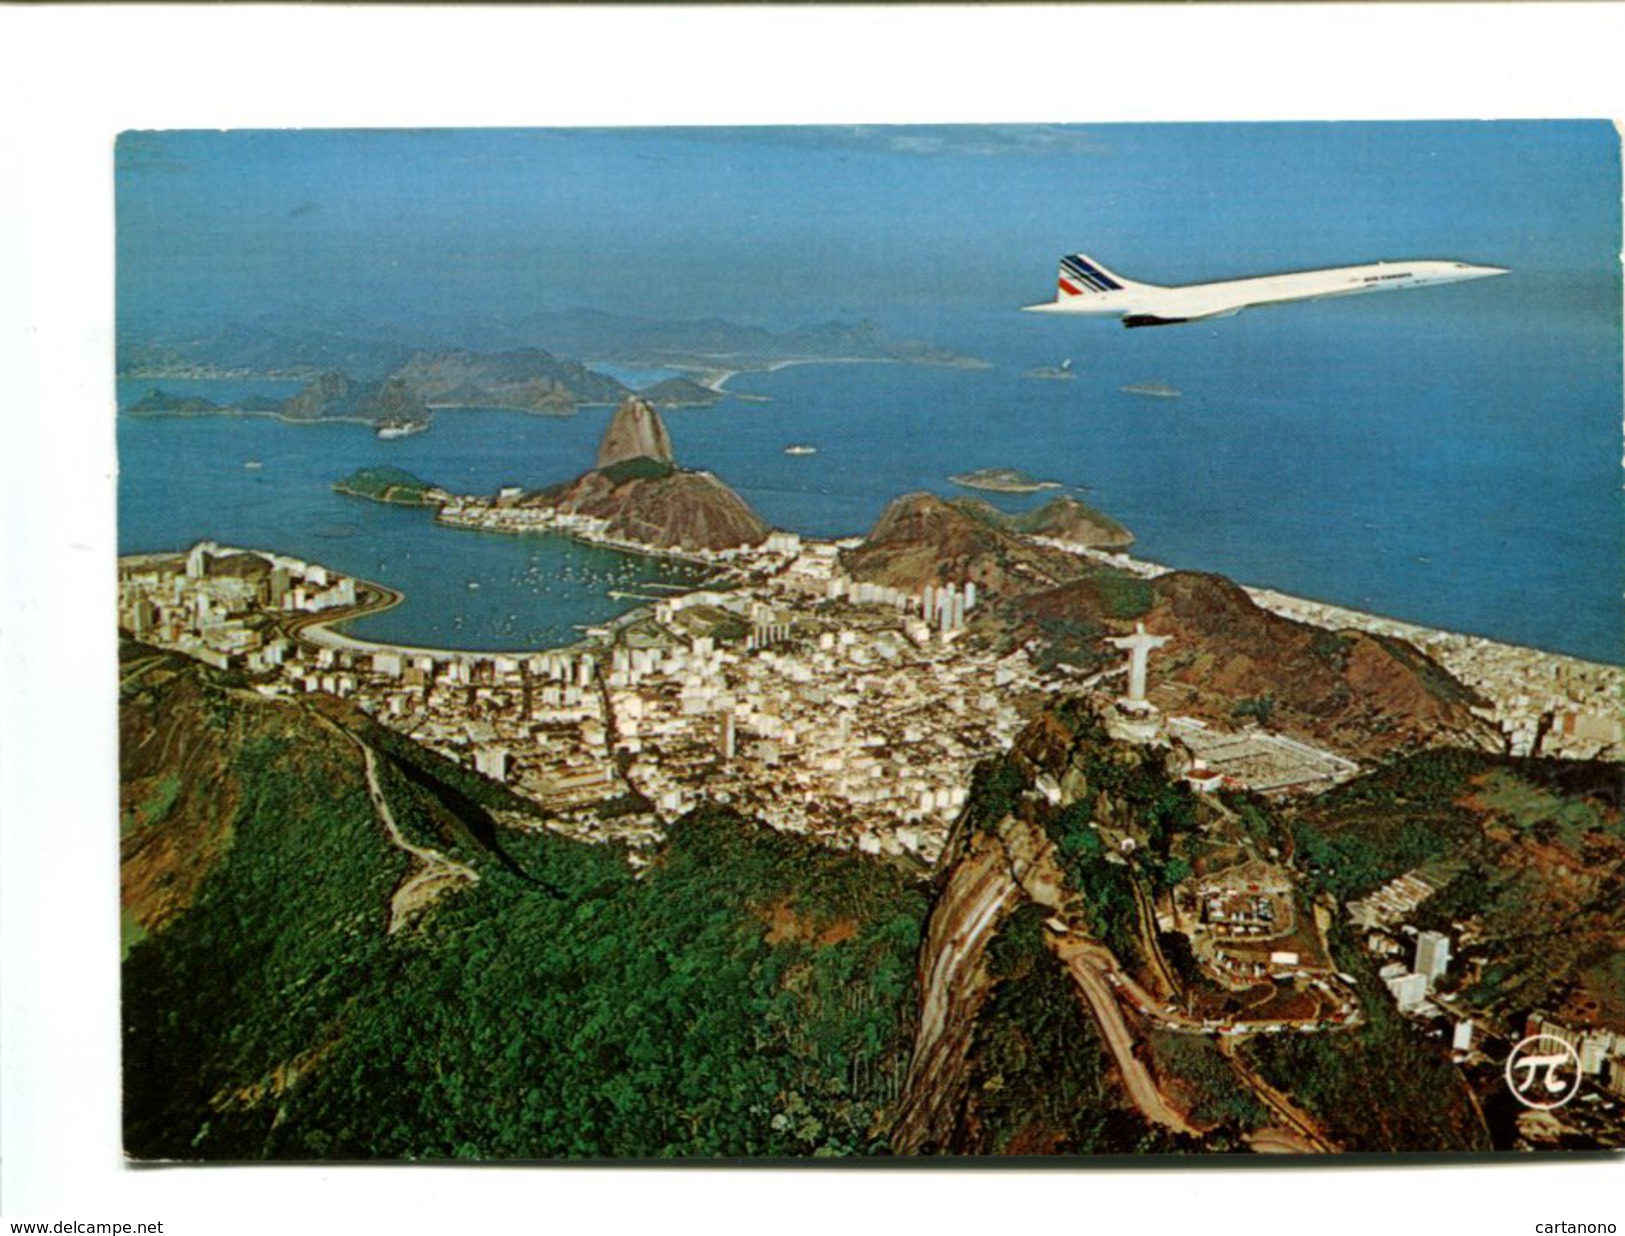 Cp - AVION - Air France Concorde Survolant Rio - 1946-....: Moderne